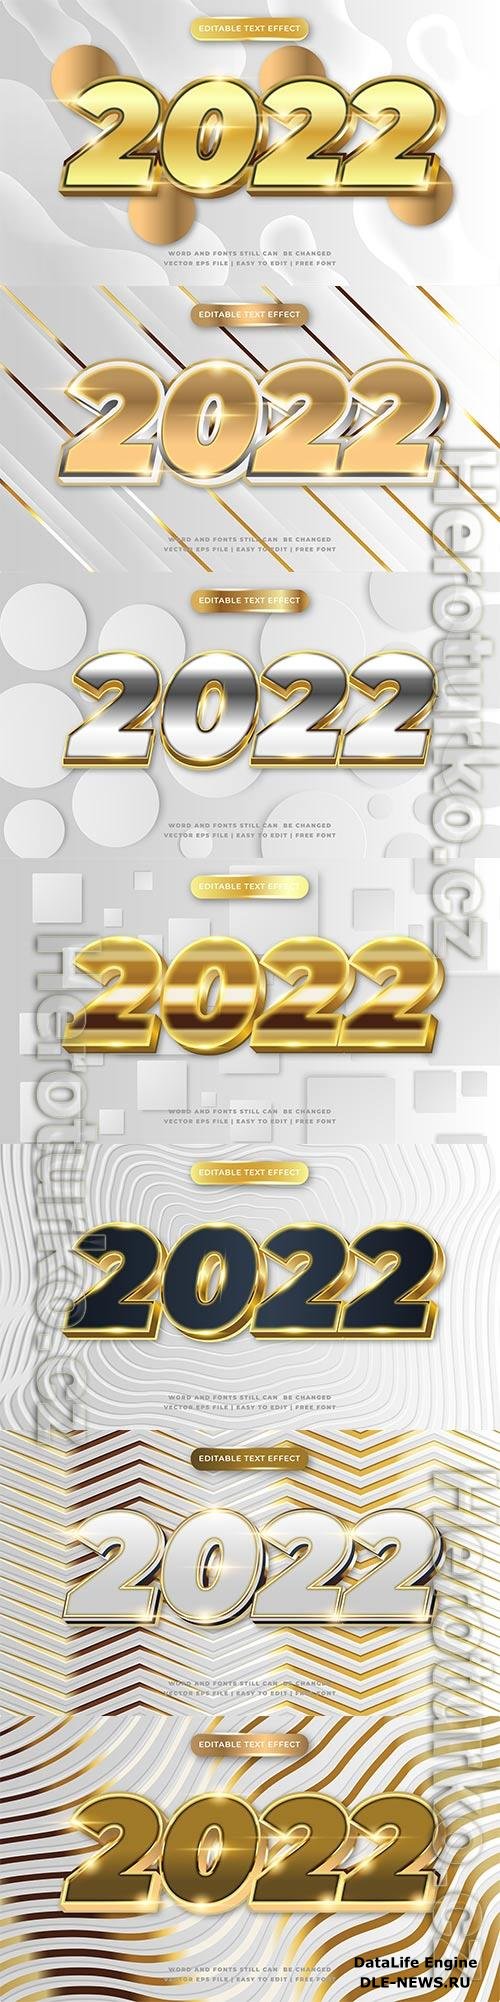 Editable text effect happy new year 2022 premium vector